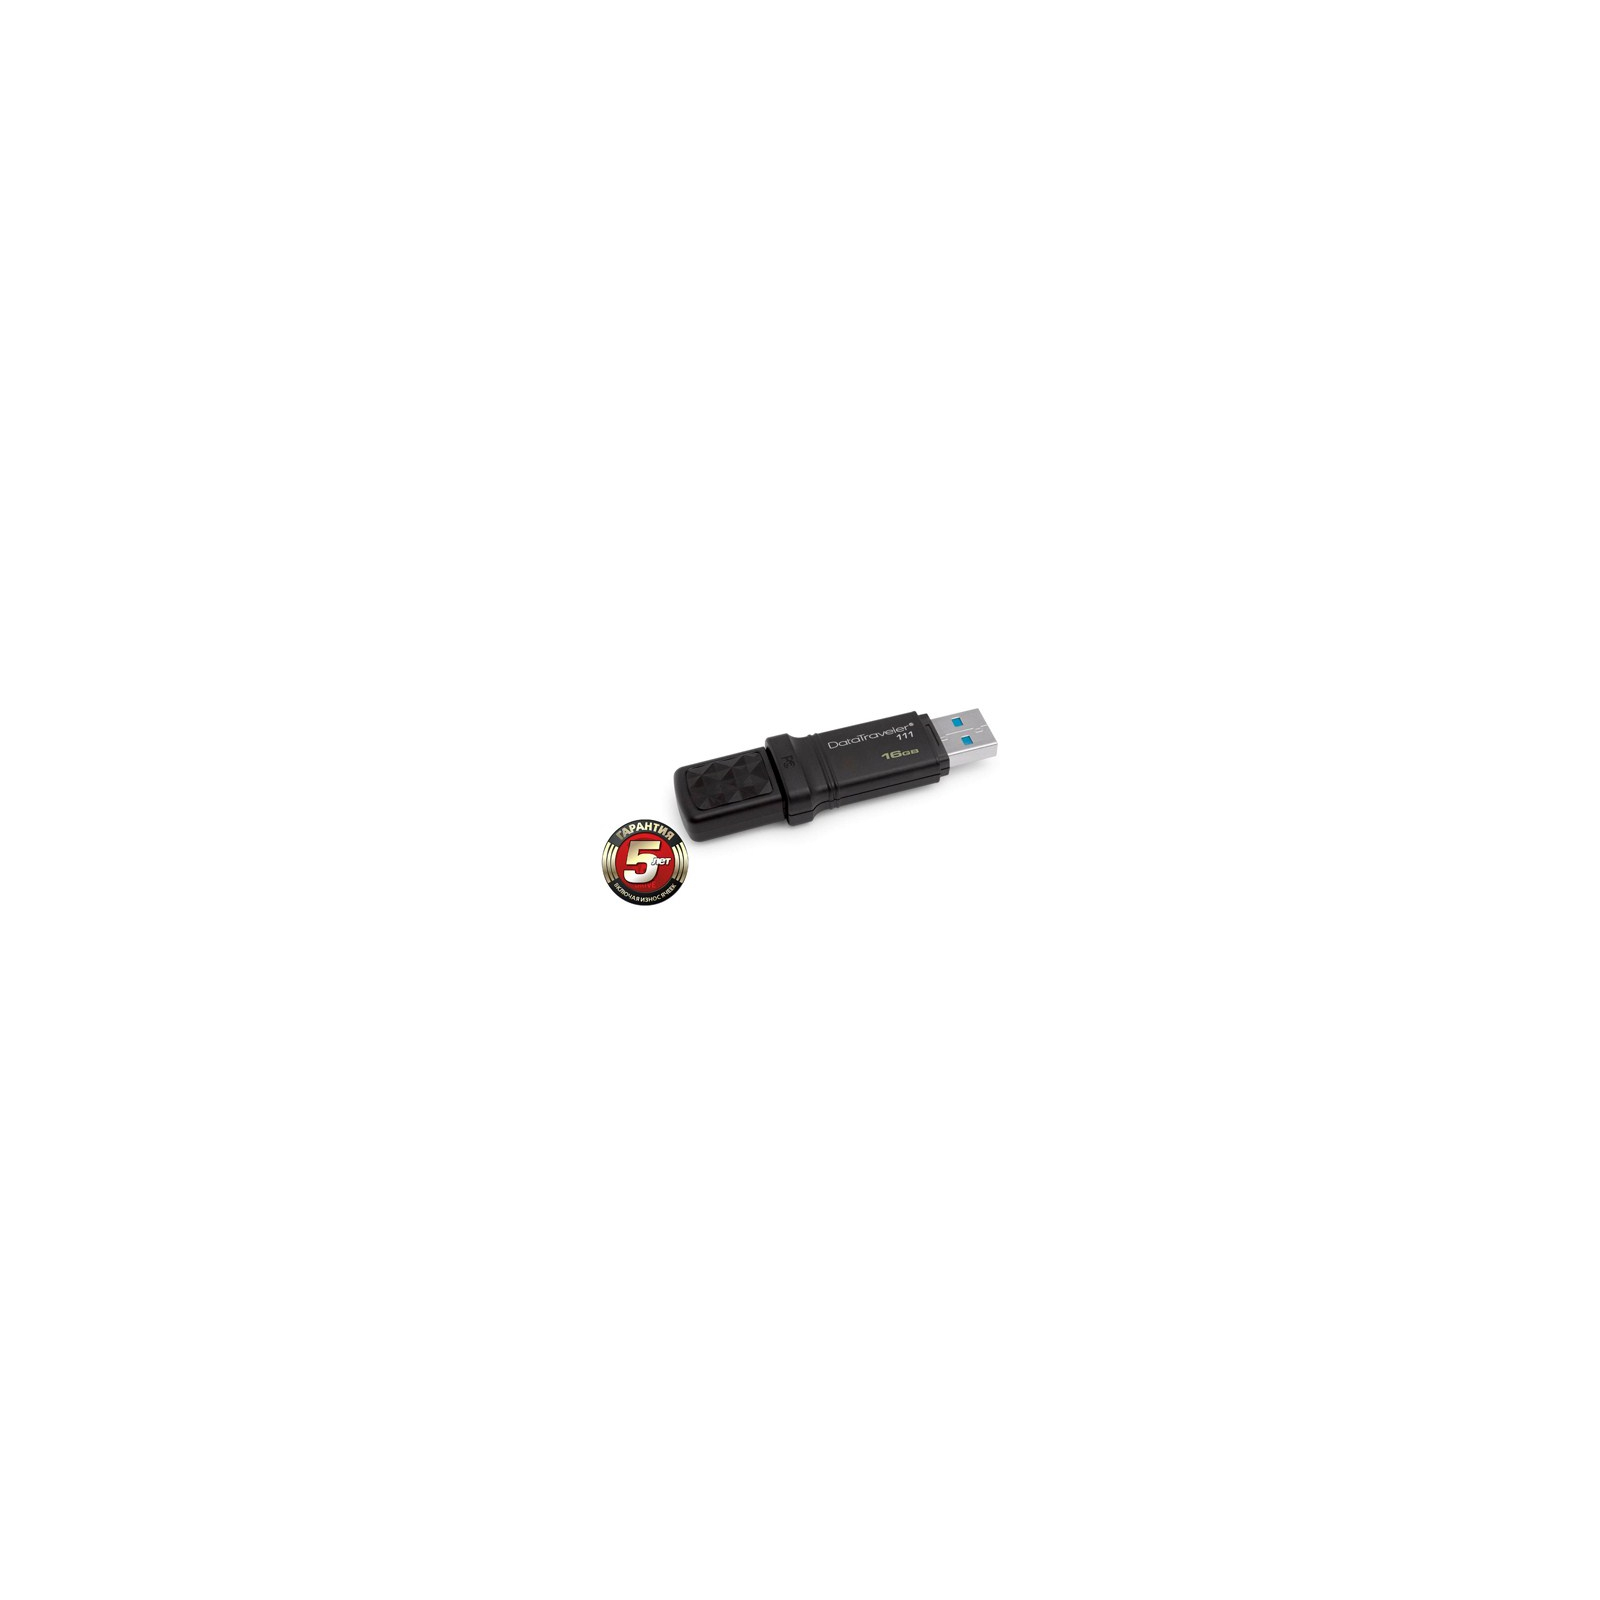 USB флеш накопитель Kingston 16Gb DataTraveler DT111 Black (DT111/16GB) изображение 2